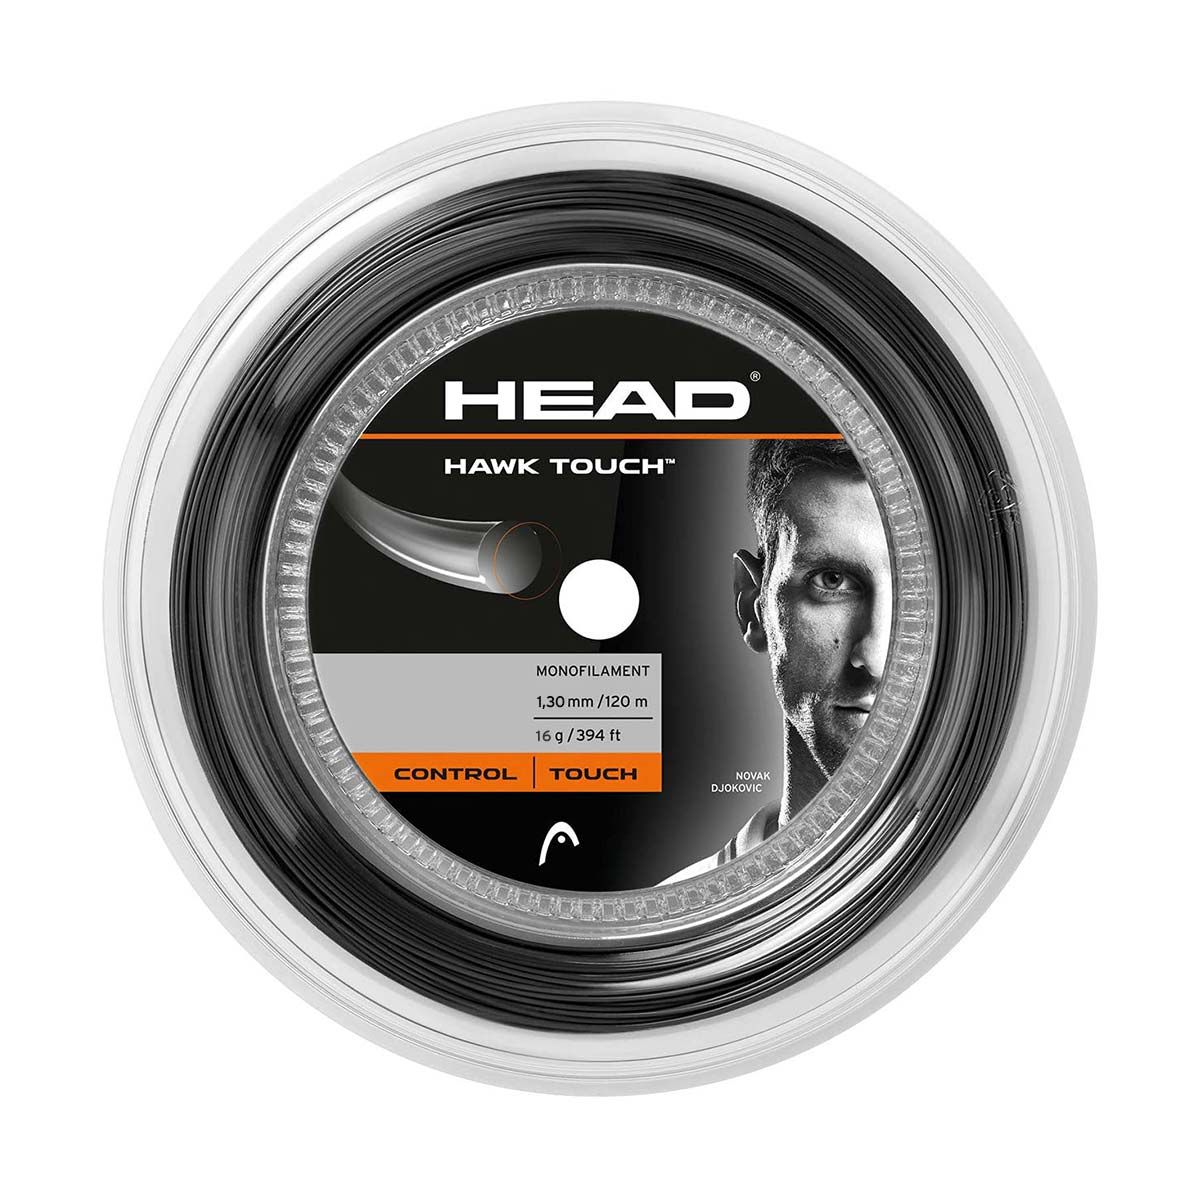 HEAD Hawk Touch 16L -200mtr Tennis Reel (Anthra)